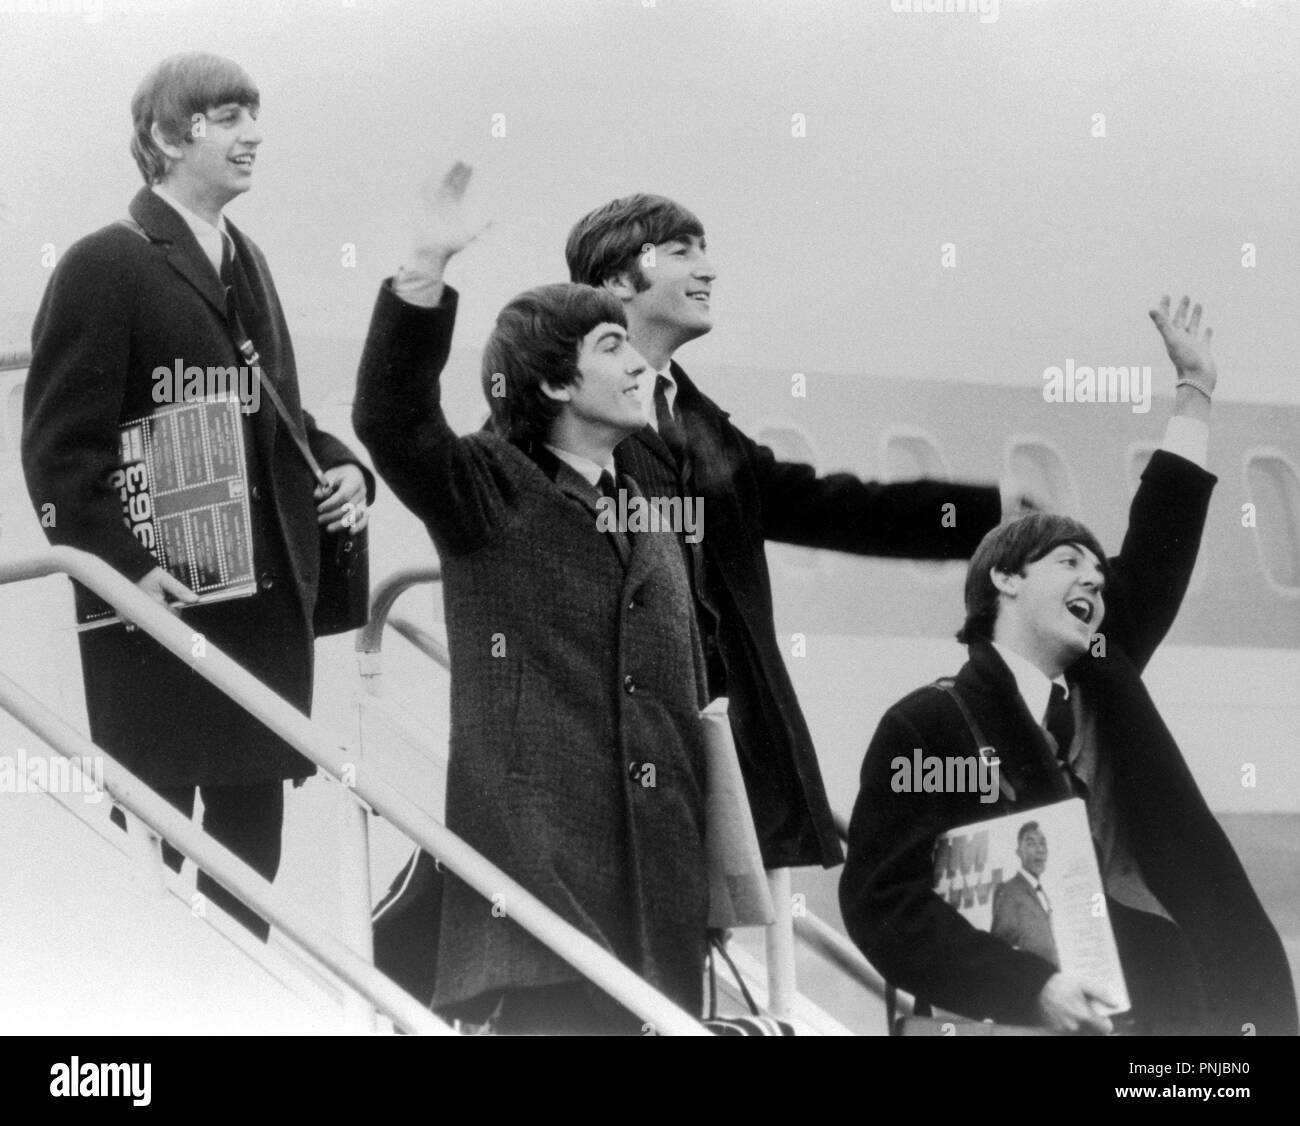 THE BEATLES; RINGO STARR; GEORGE HARRISON; PAUL MACCARTNEY; JOHN LENNON. 1964. Stock Photo